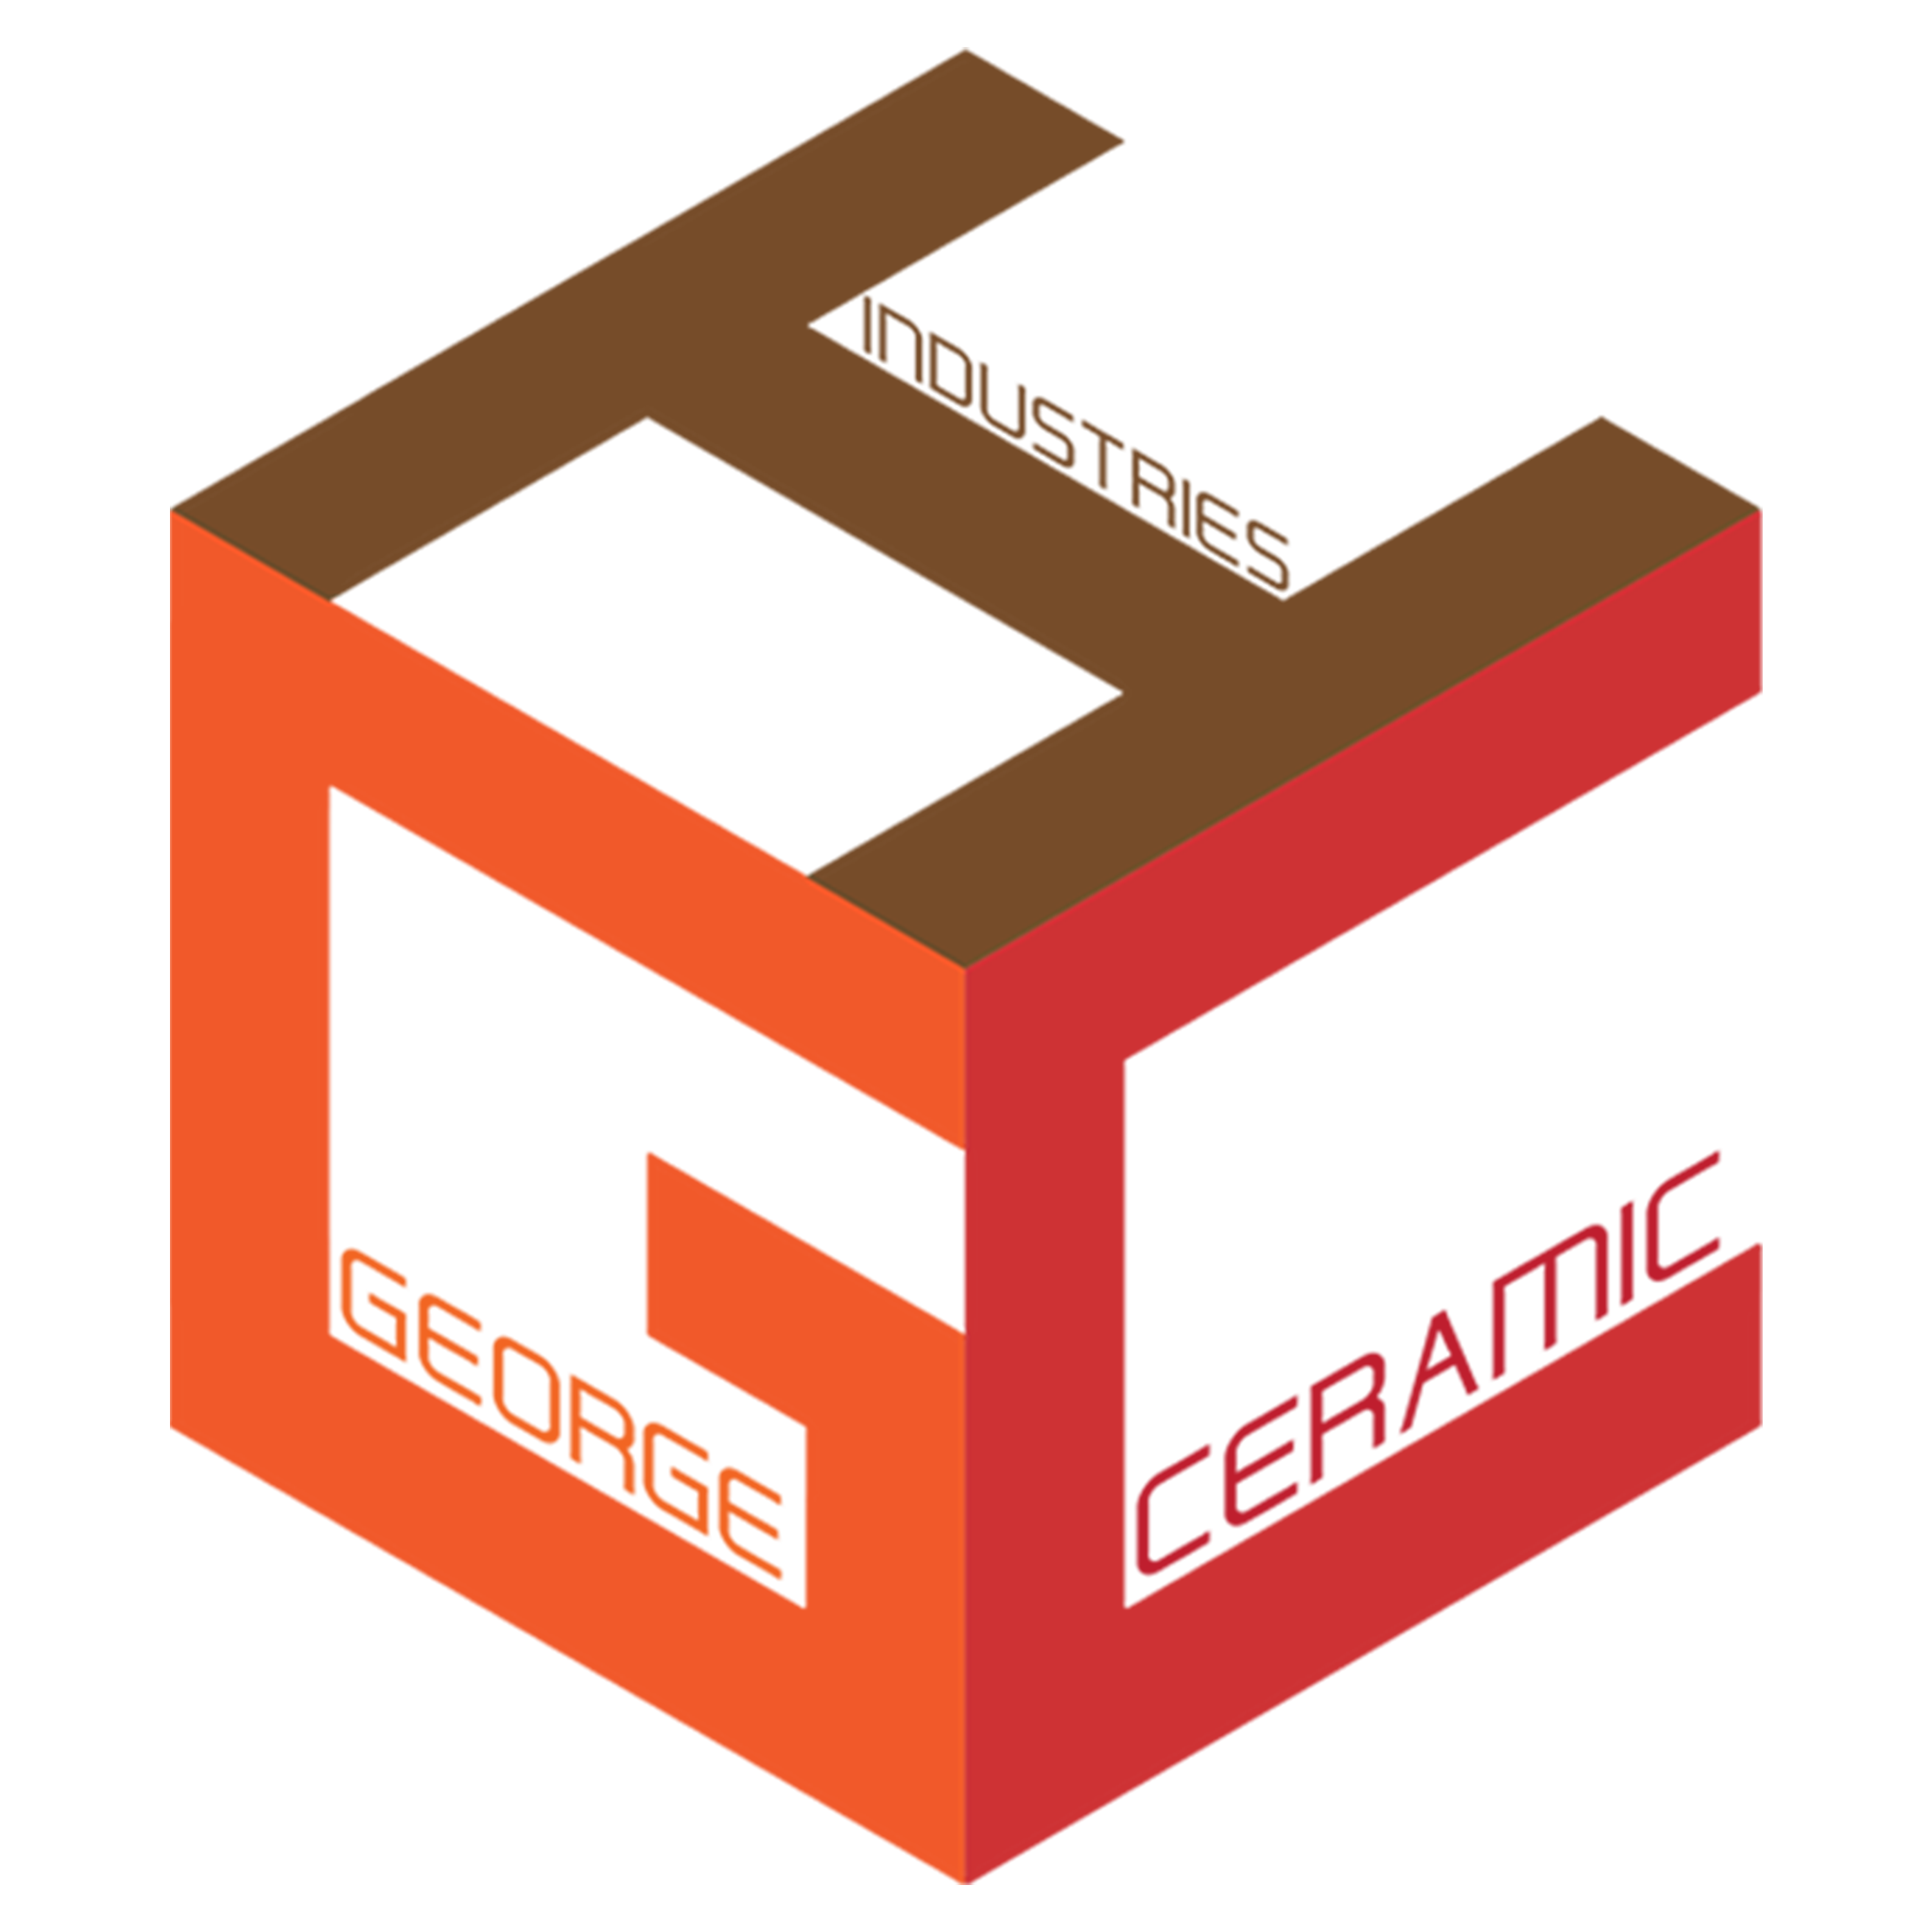 Image of Geroge Ceramic Industries Logo